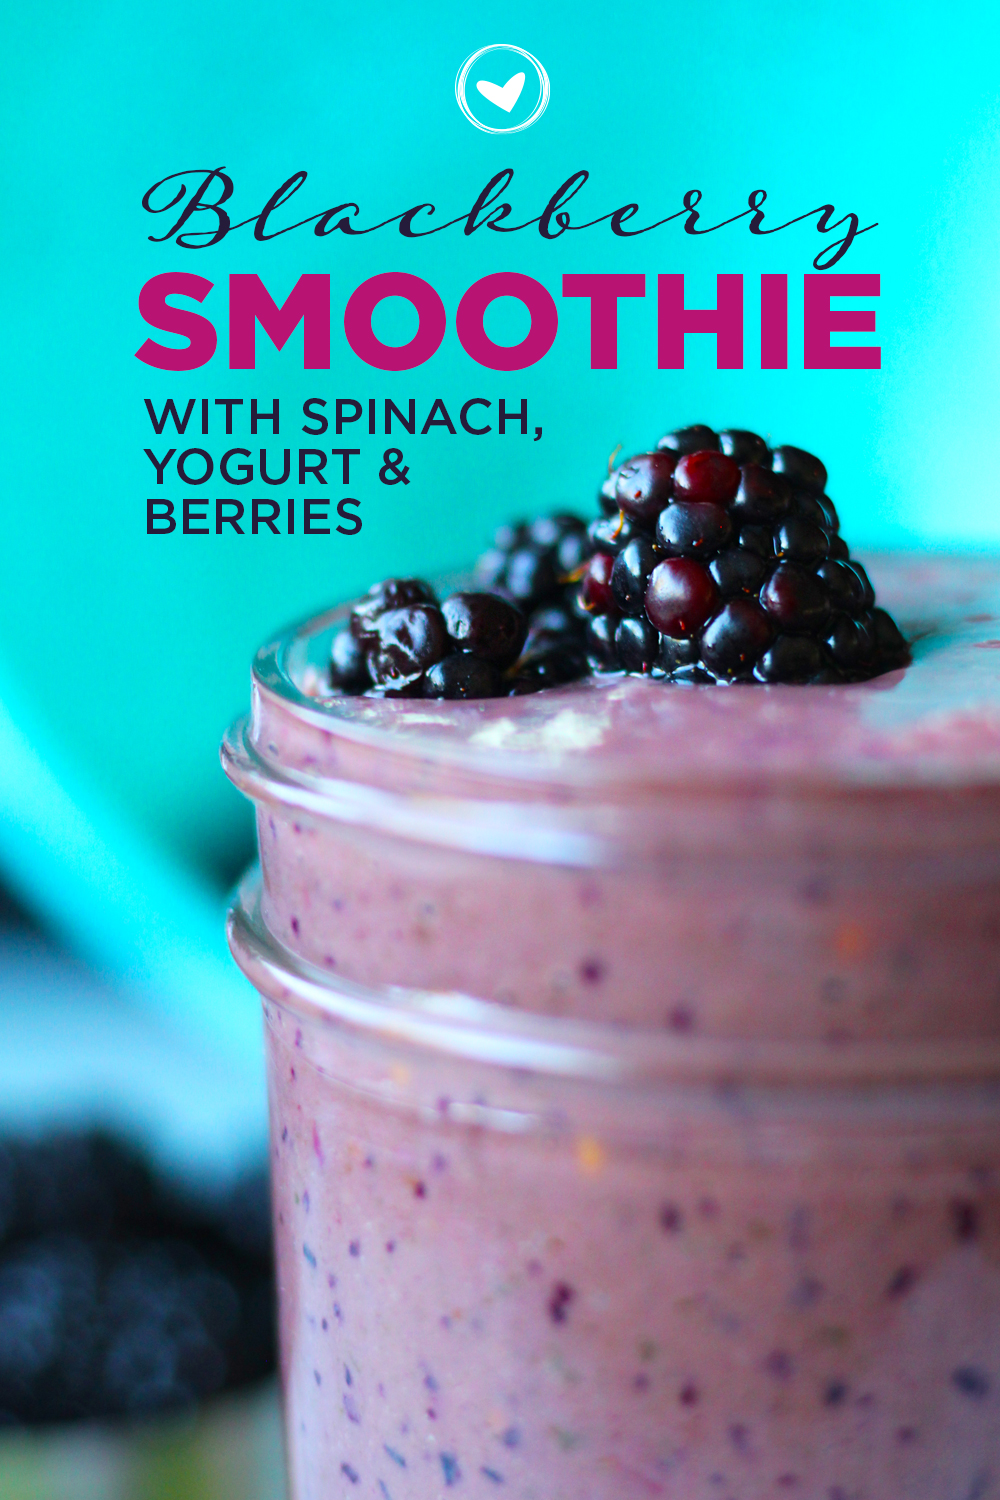 Blackberry Smoothie With Spinach, Yogurt & Berries